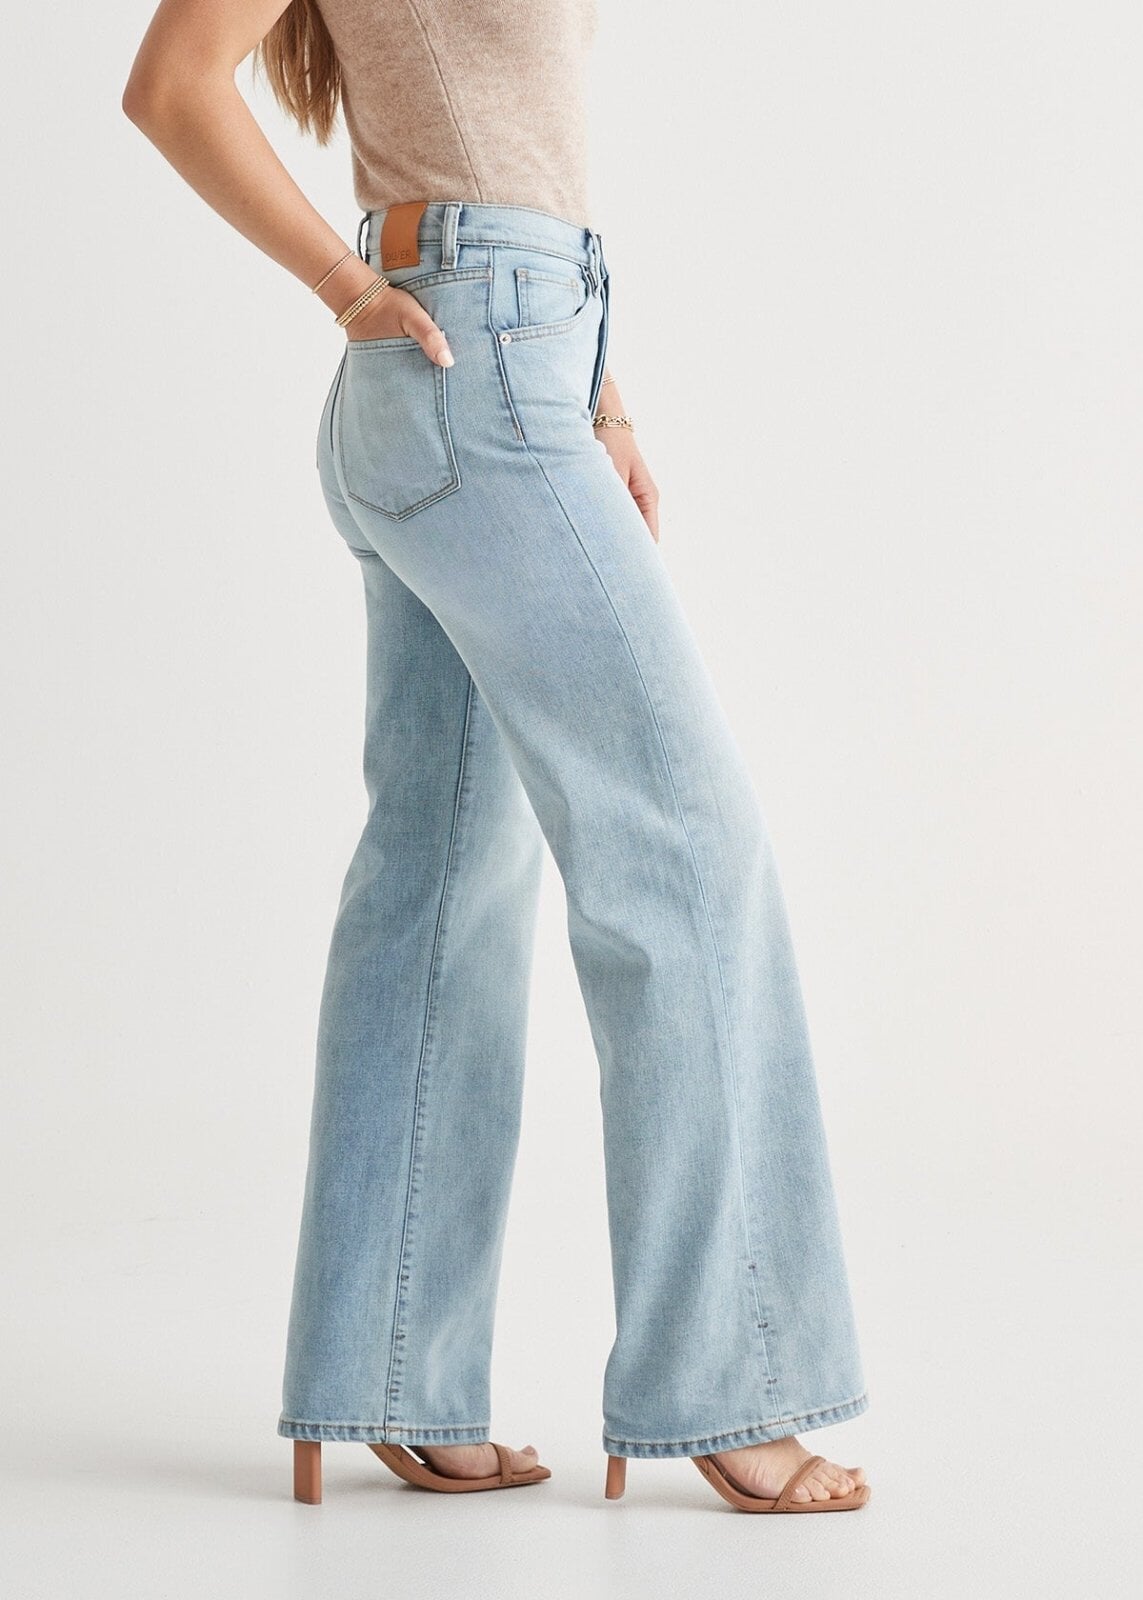 Fashion High Waist Jeans - Bell Jeans - Elastic Slim Fit Ladies